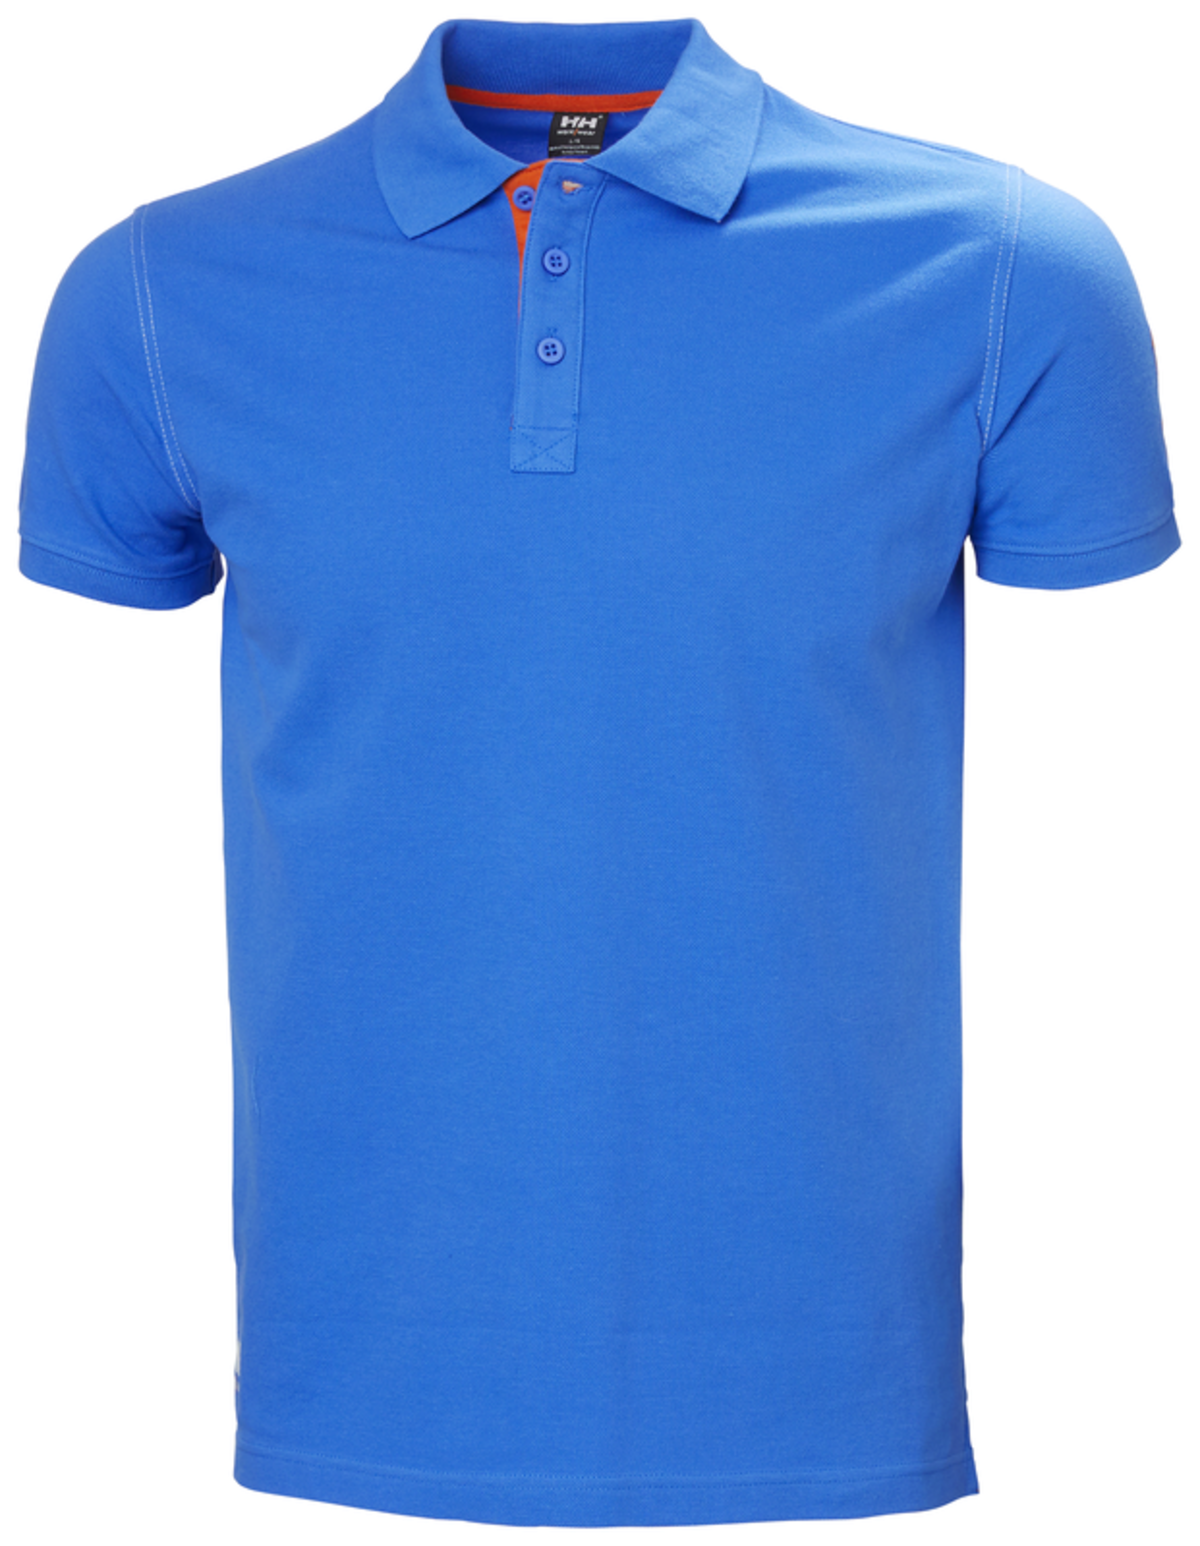 Helly Hansen Oxford Polo - Racer Blue | Order Uniform UK Ltd